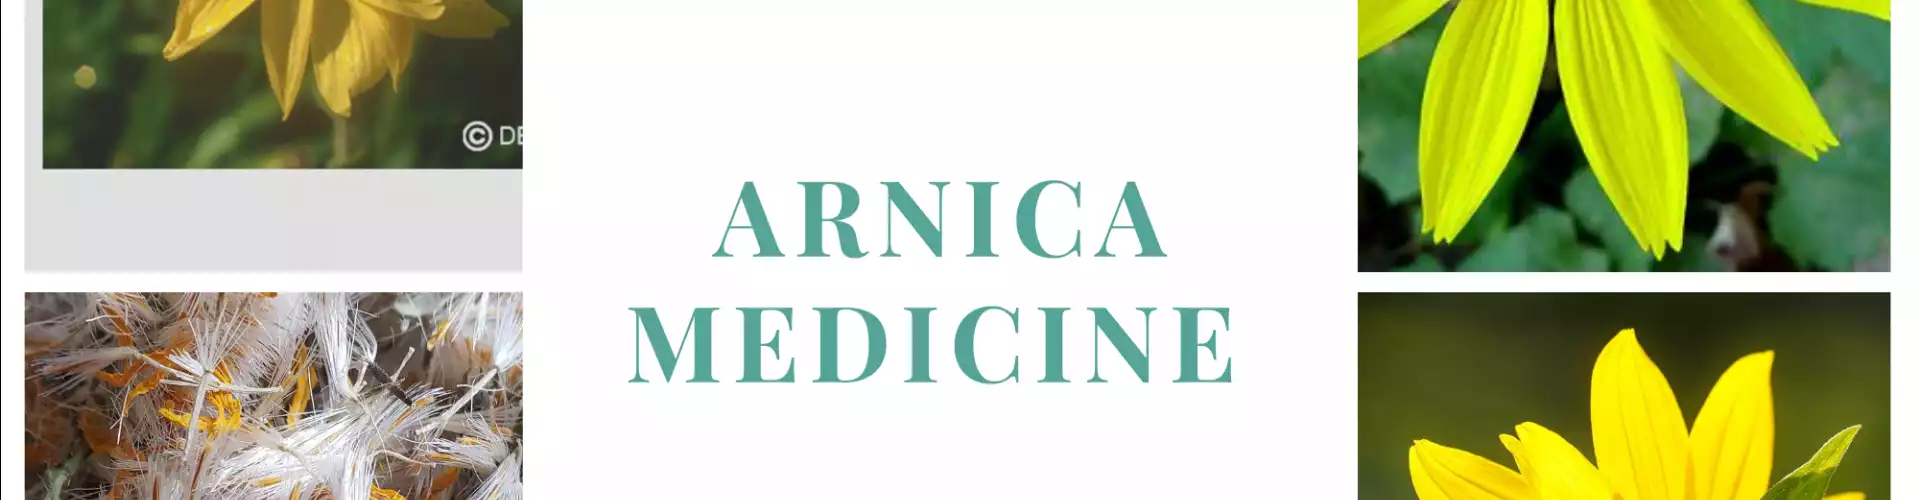 Arnica Plant Medicine